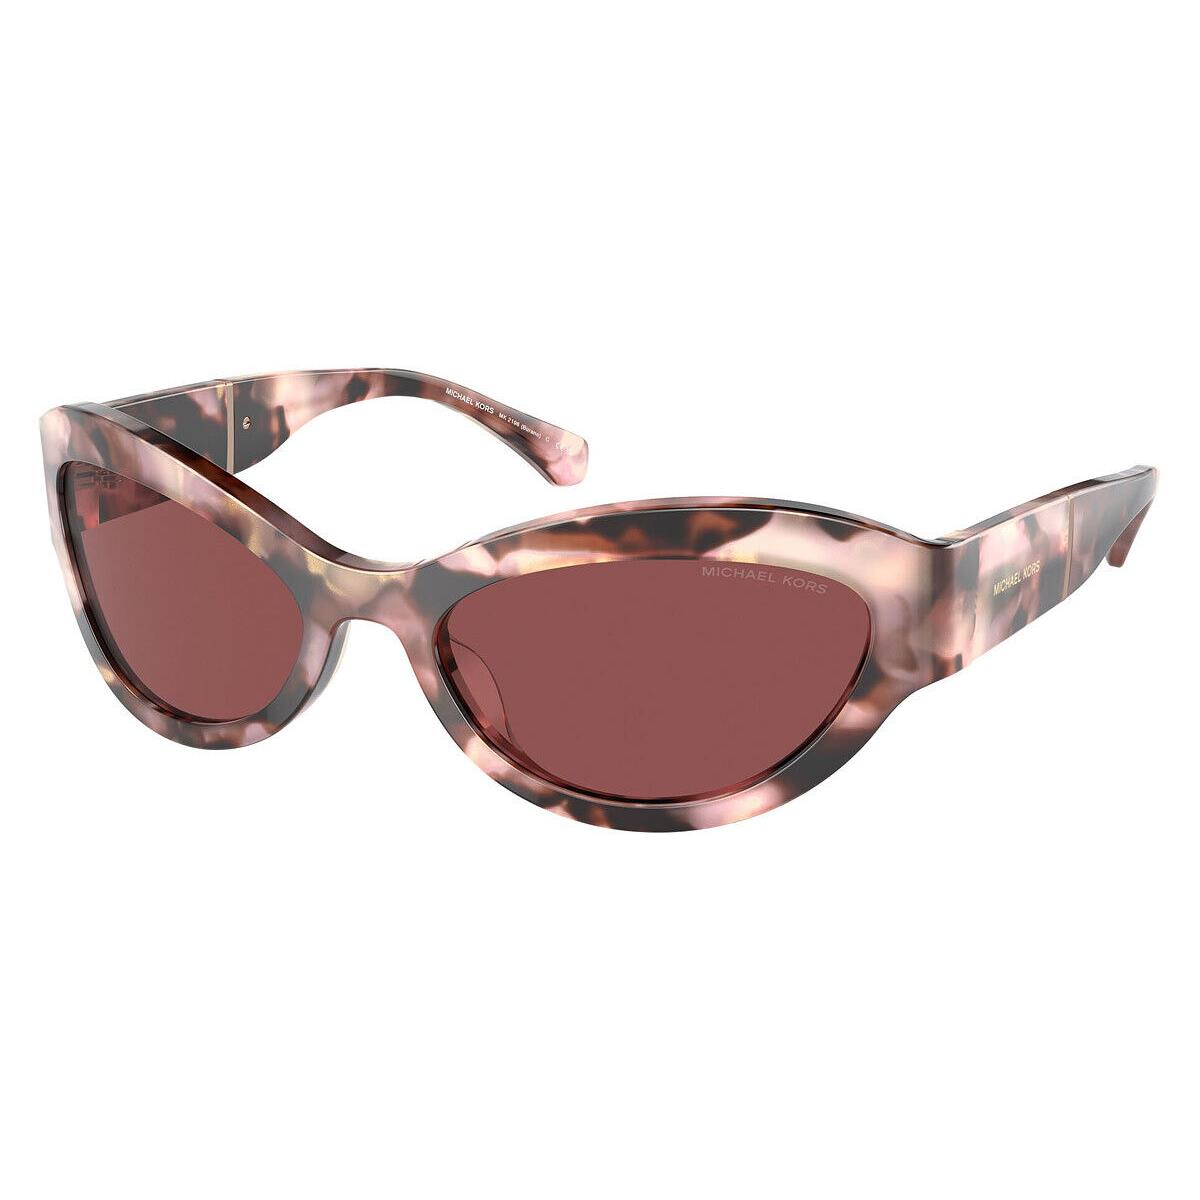 Michael Kors Women`s 59mm Pink Pearlized Tortoise Sunglasses MK2198-394675-59